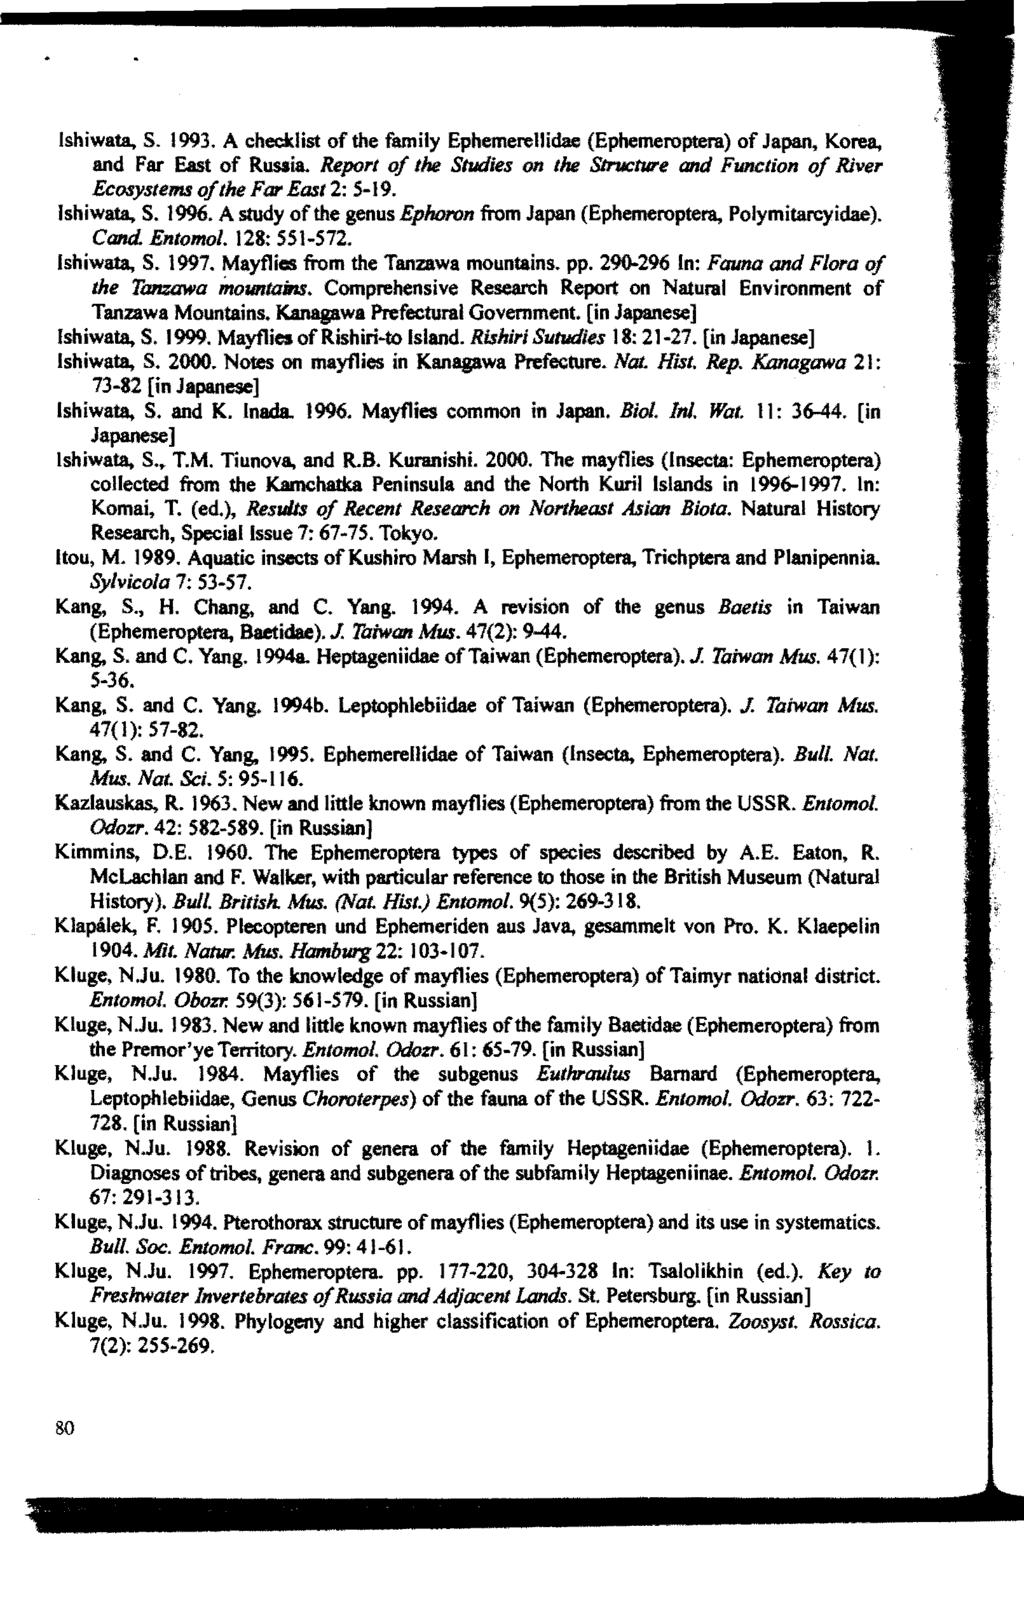 lshiwata, S. 1993. A checklist of the family Ephemerellidae (Ephemeroptera) of Japan, Korea, and Far East of Russia.